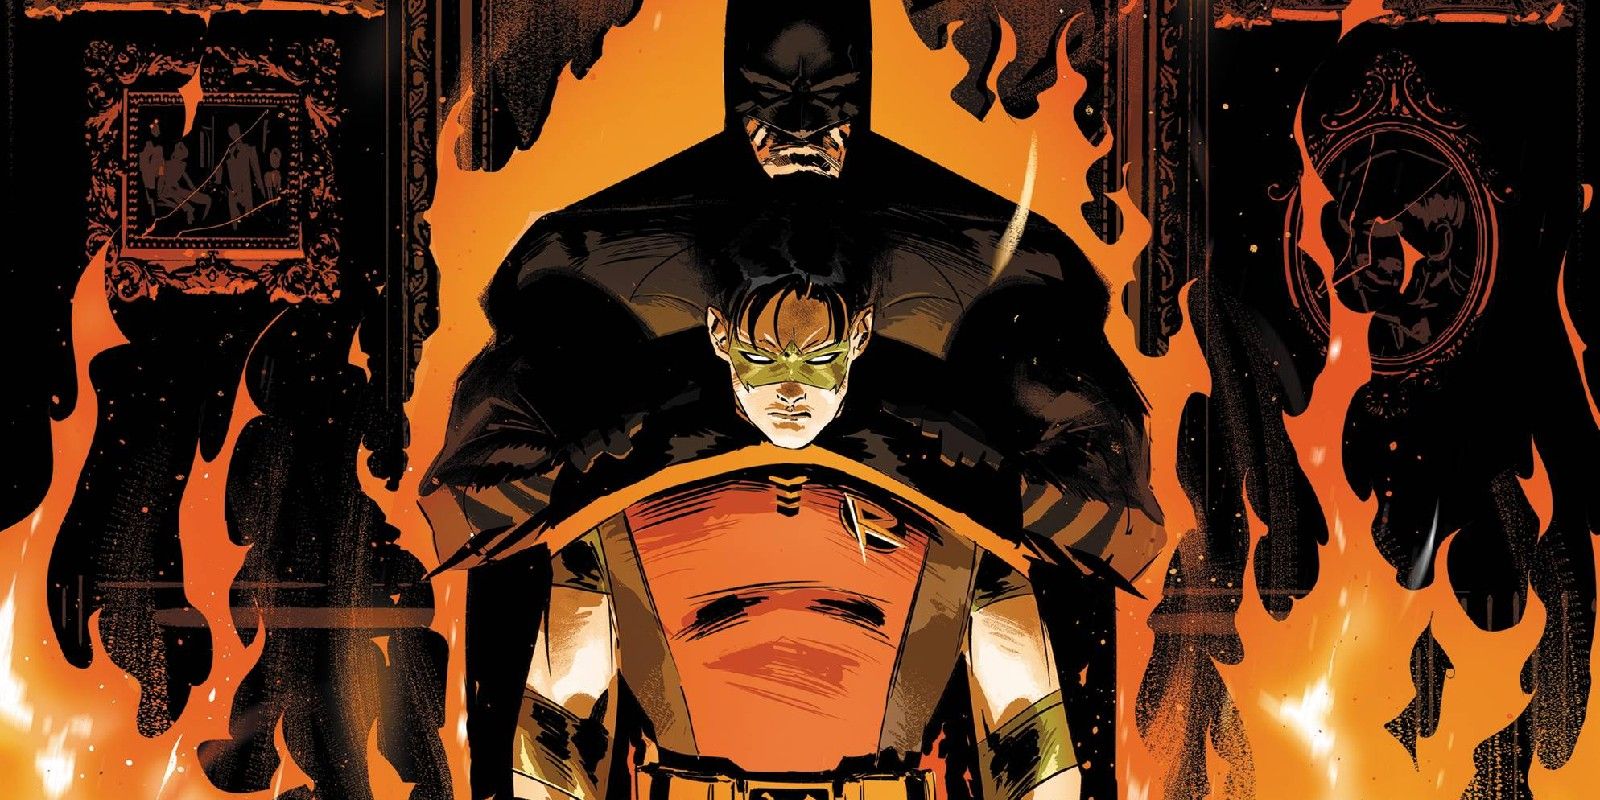 Batman Griping Tim Drake Robin's Shoulders in a Fire